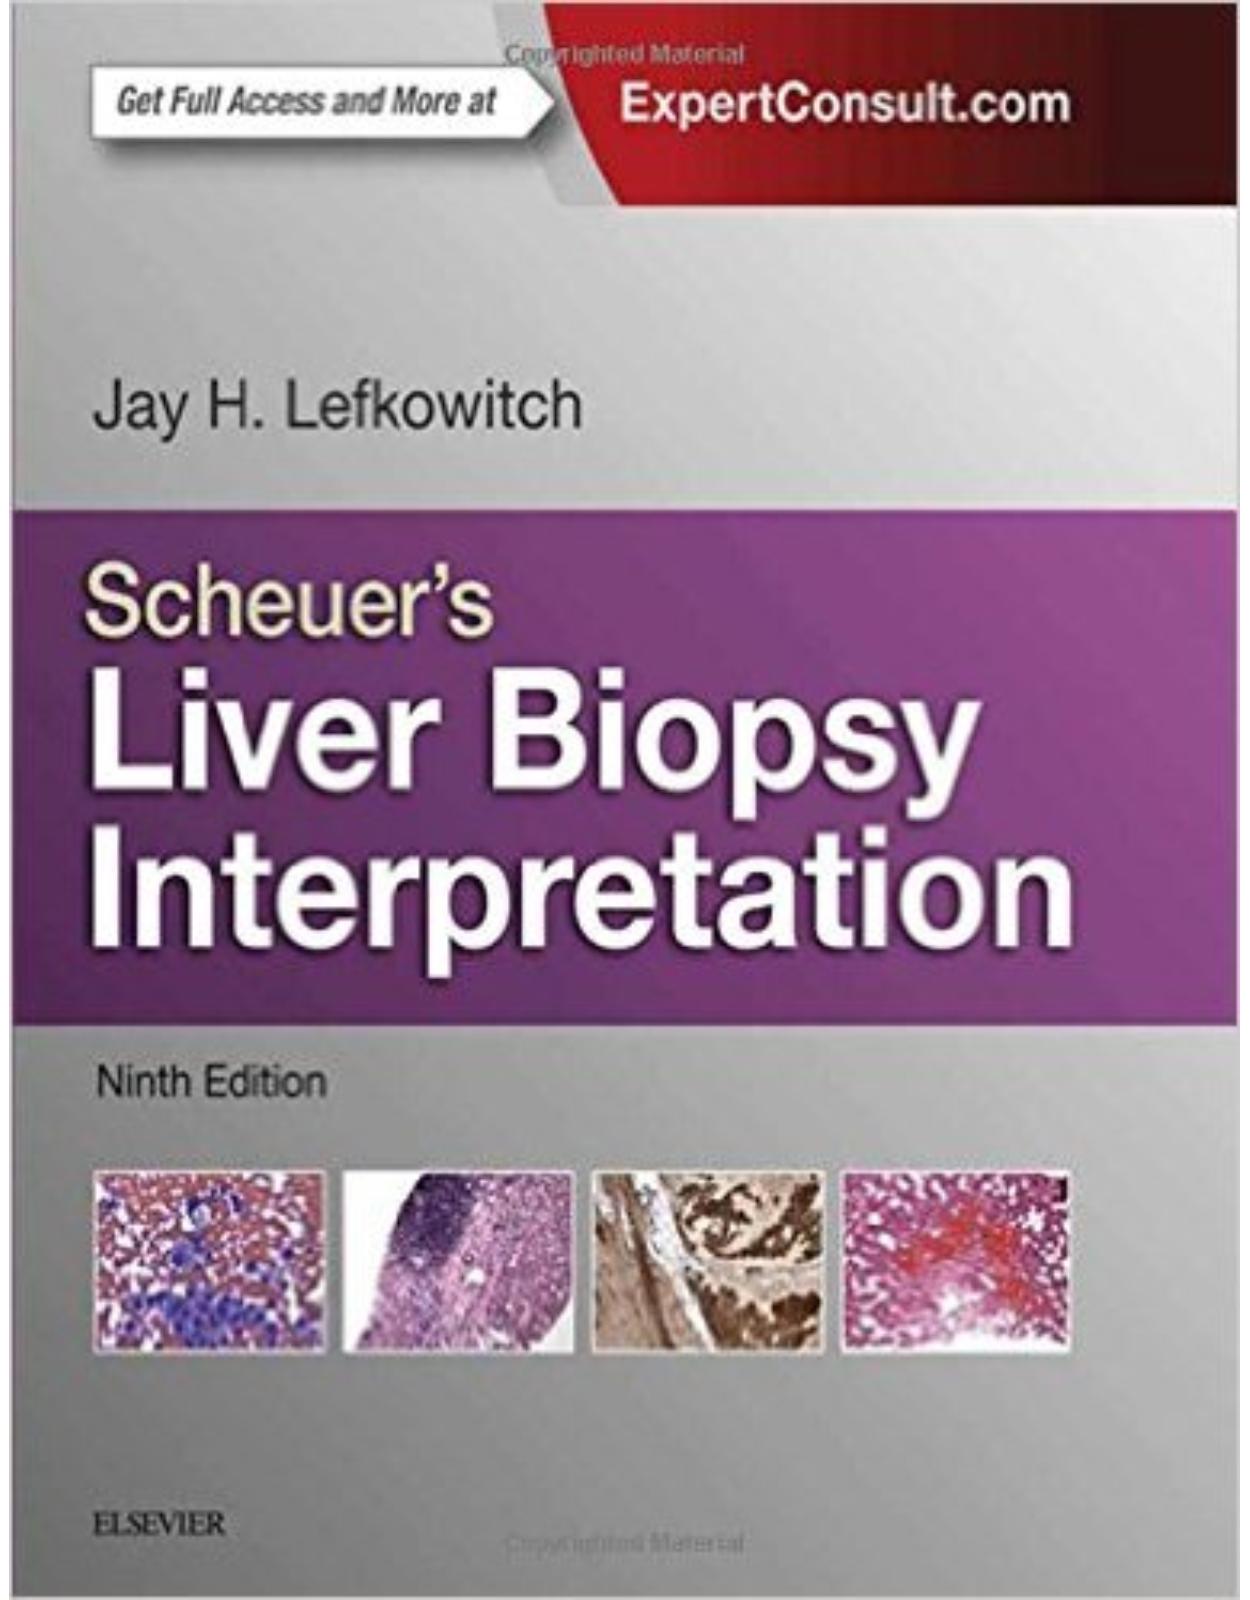 Scheuer's Liver Biopsy Interpretation, 9e